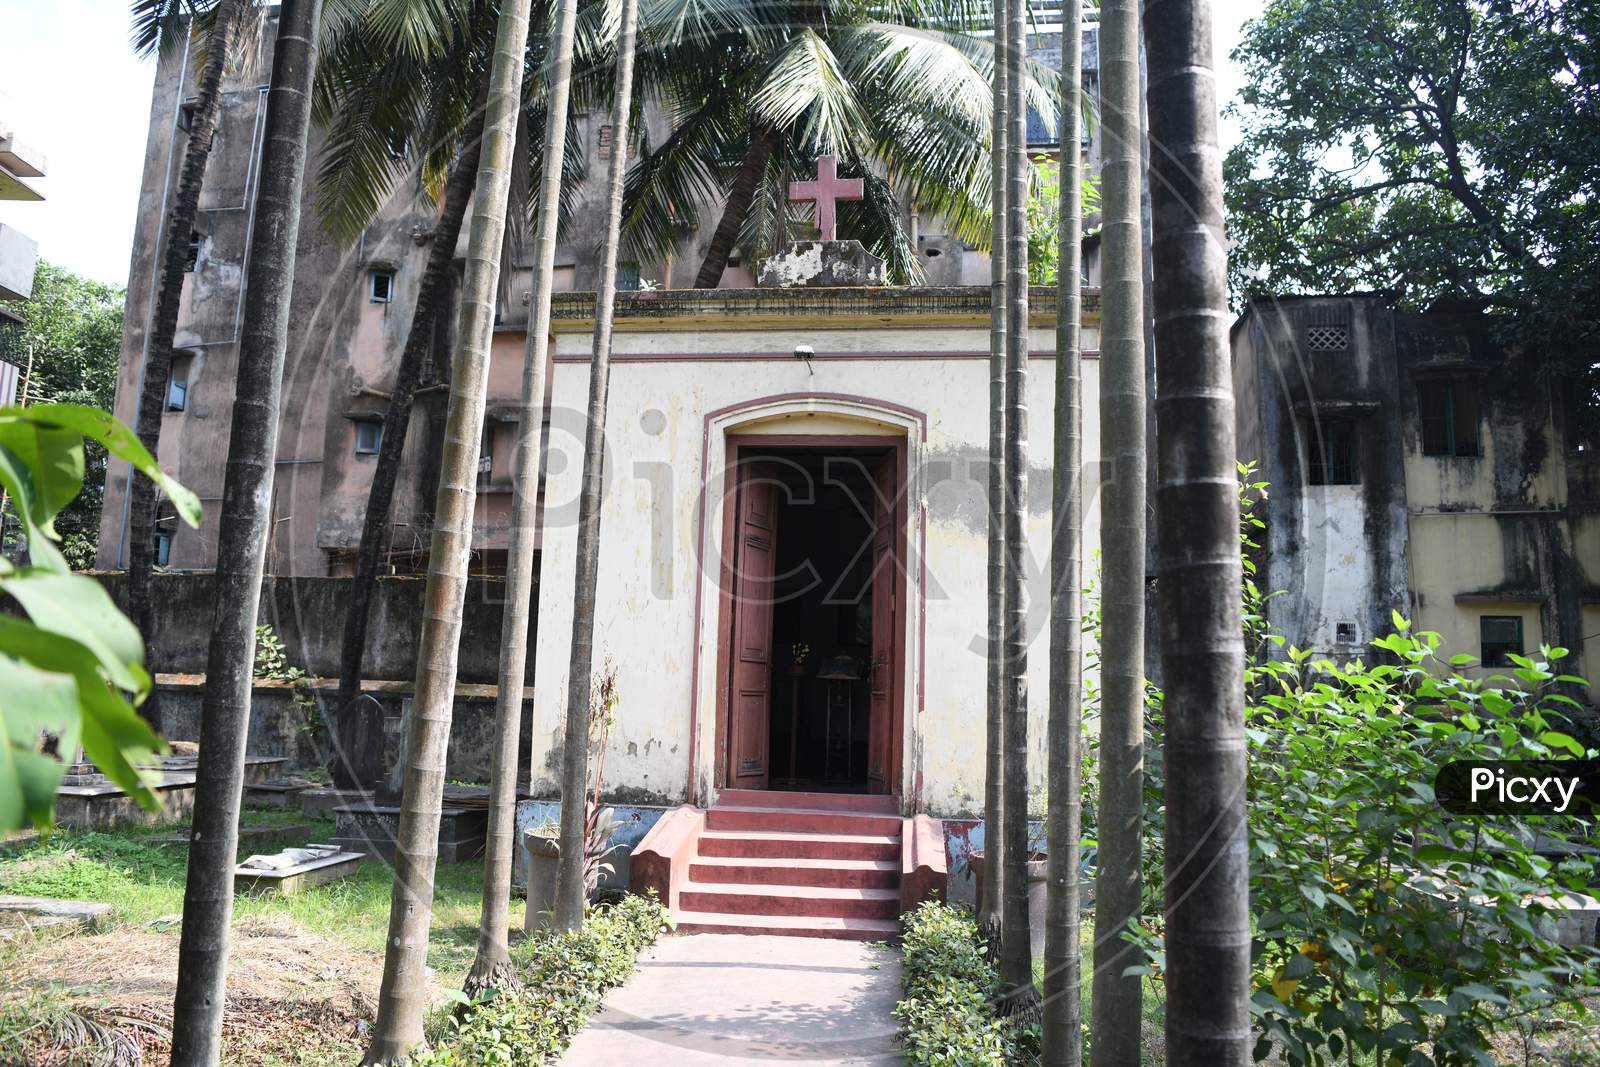 St John's Church in Kolkata, West Bengal